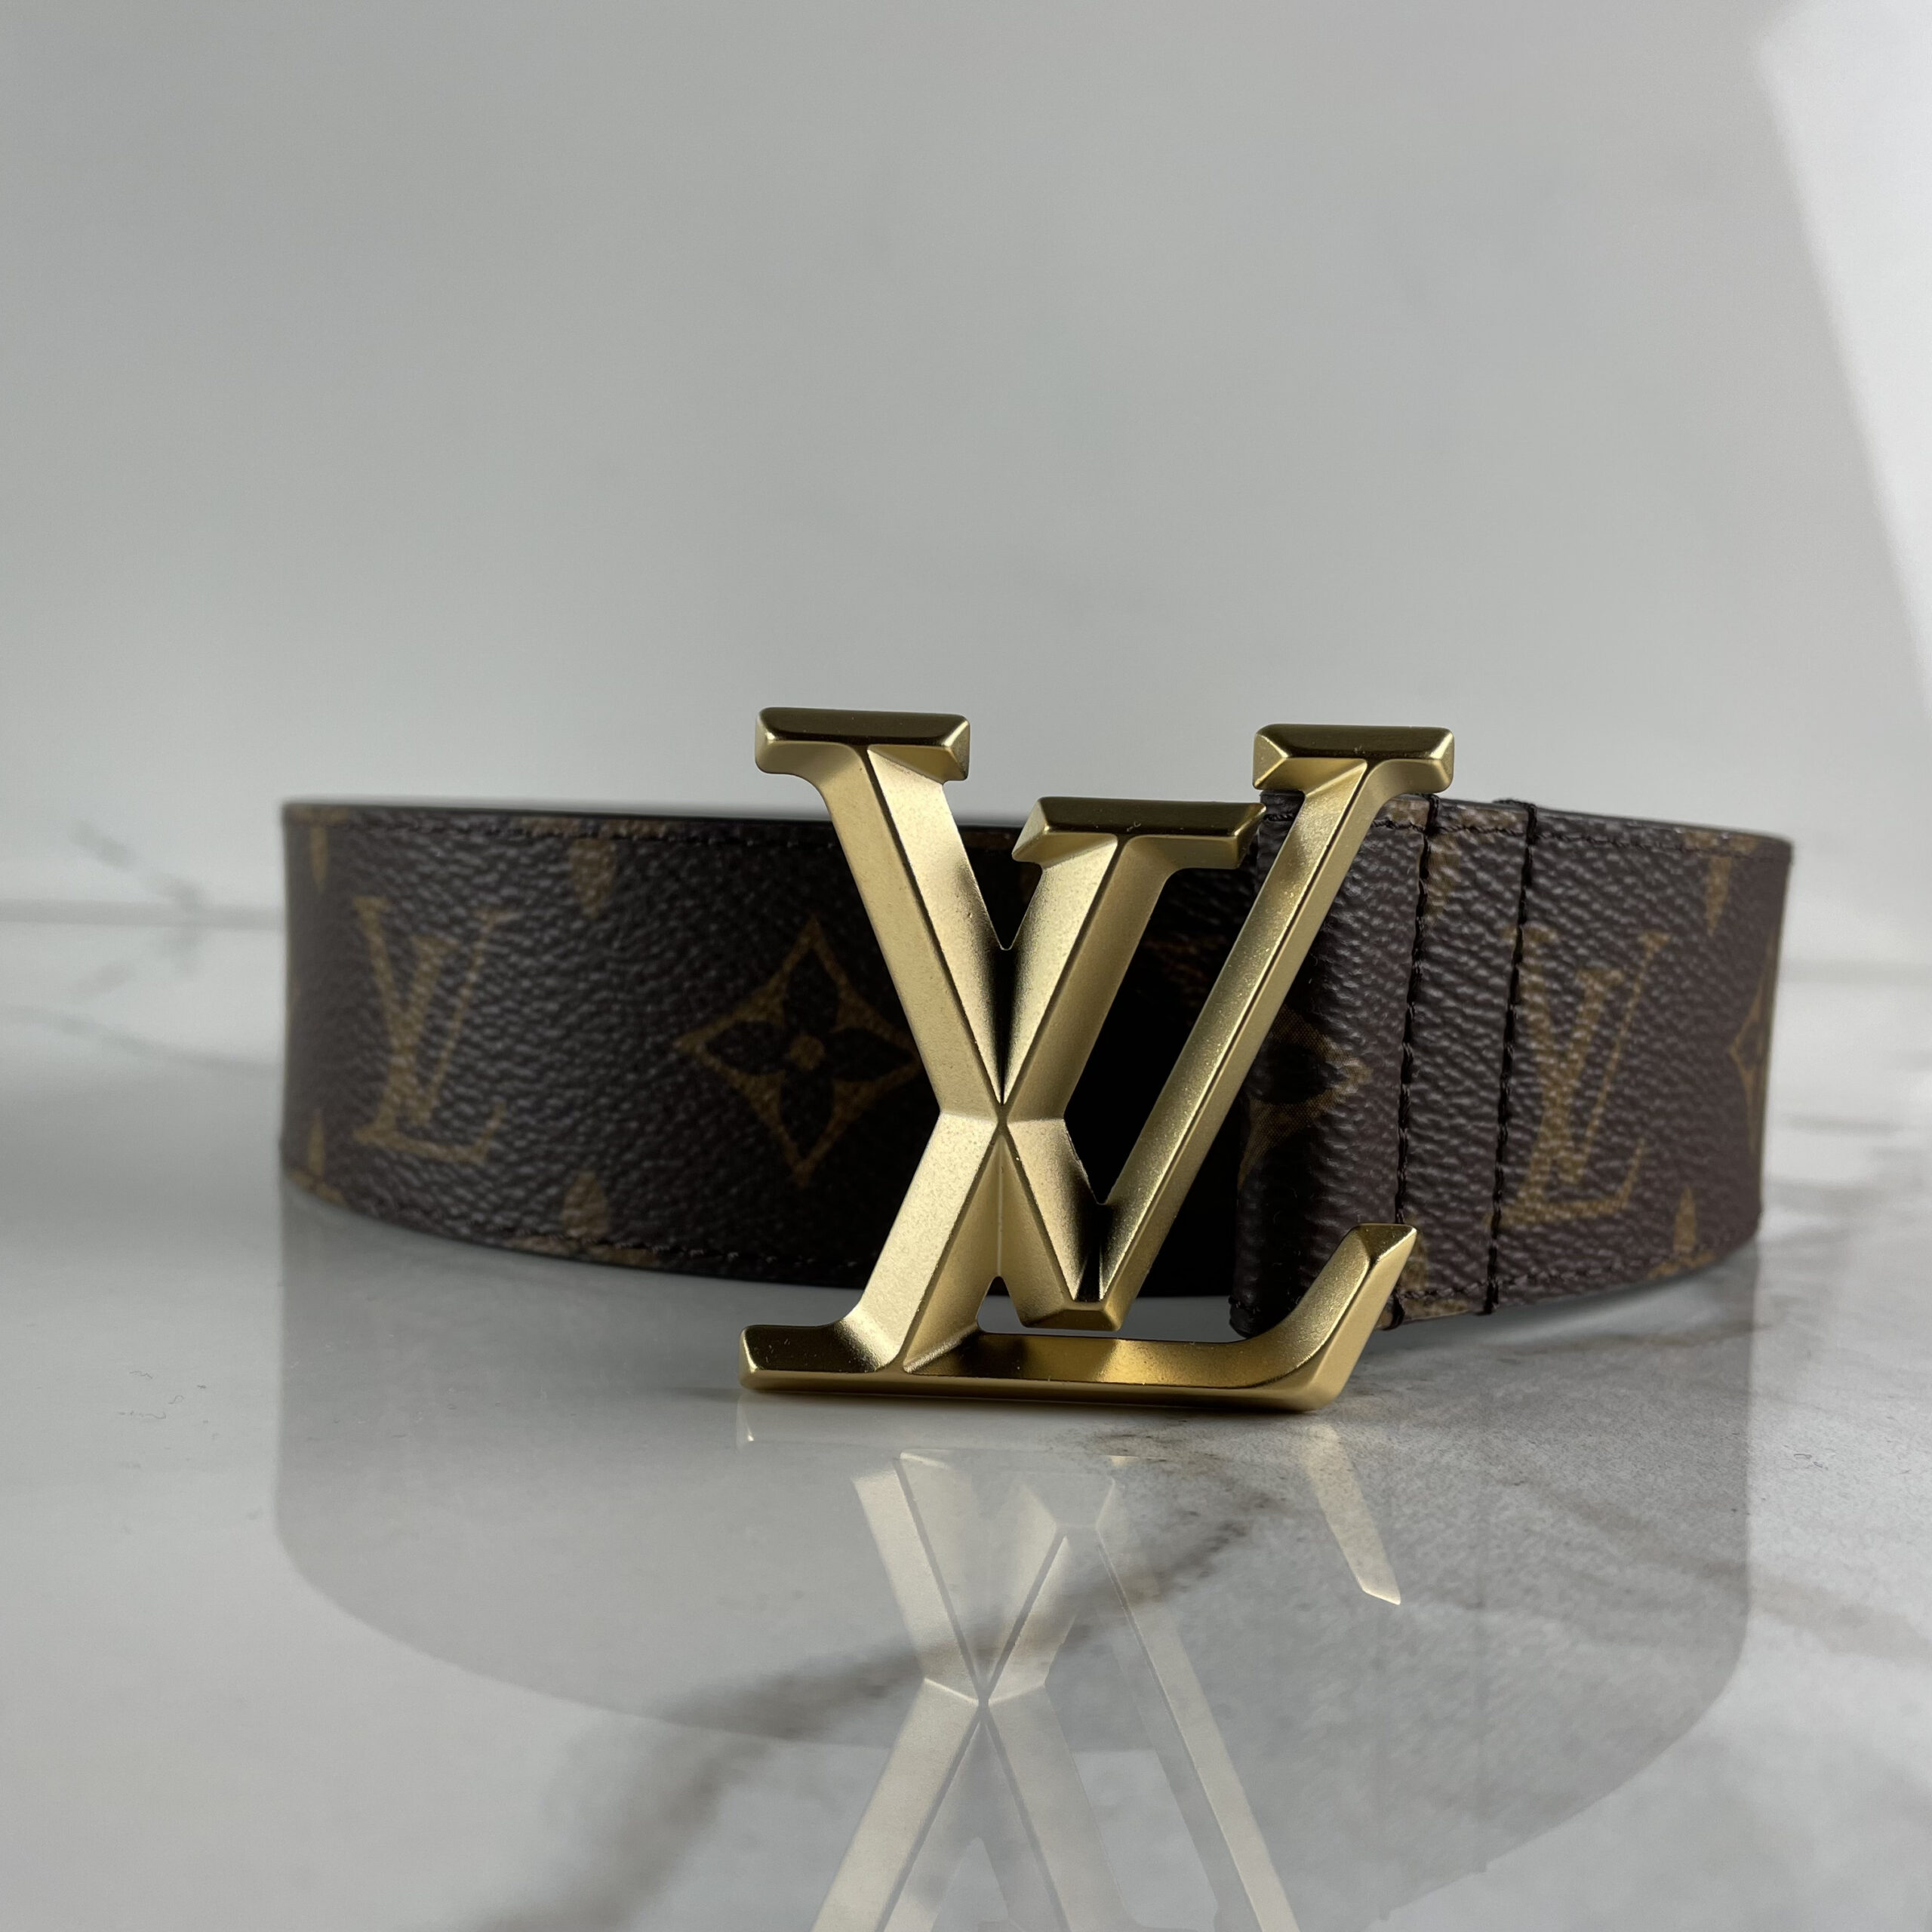 Louis Vuitton - LV Pyramide 40mm Belt - Monogram Canvas - Grey - Size: 110 cm - Luxury